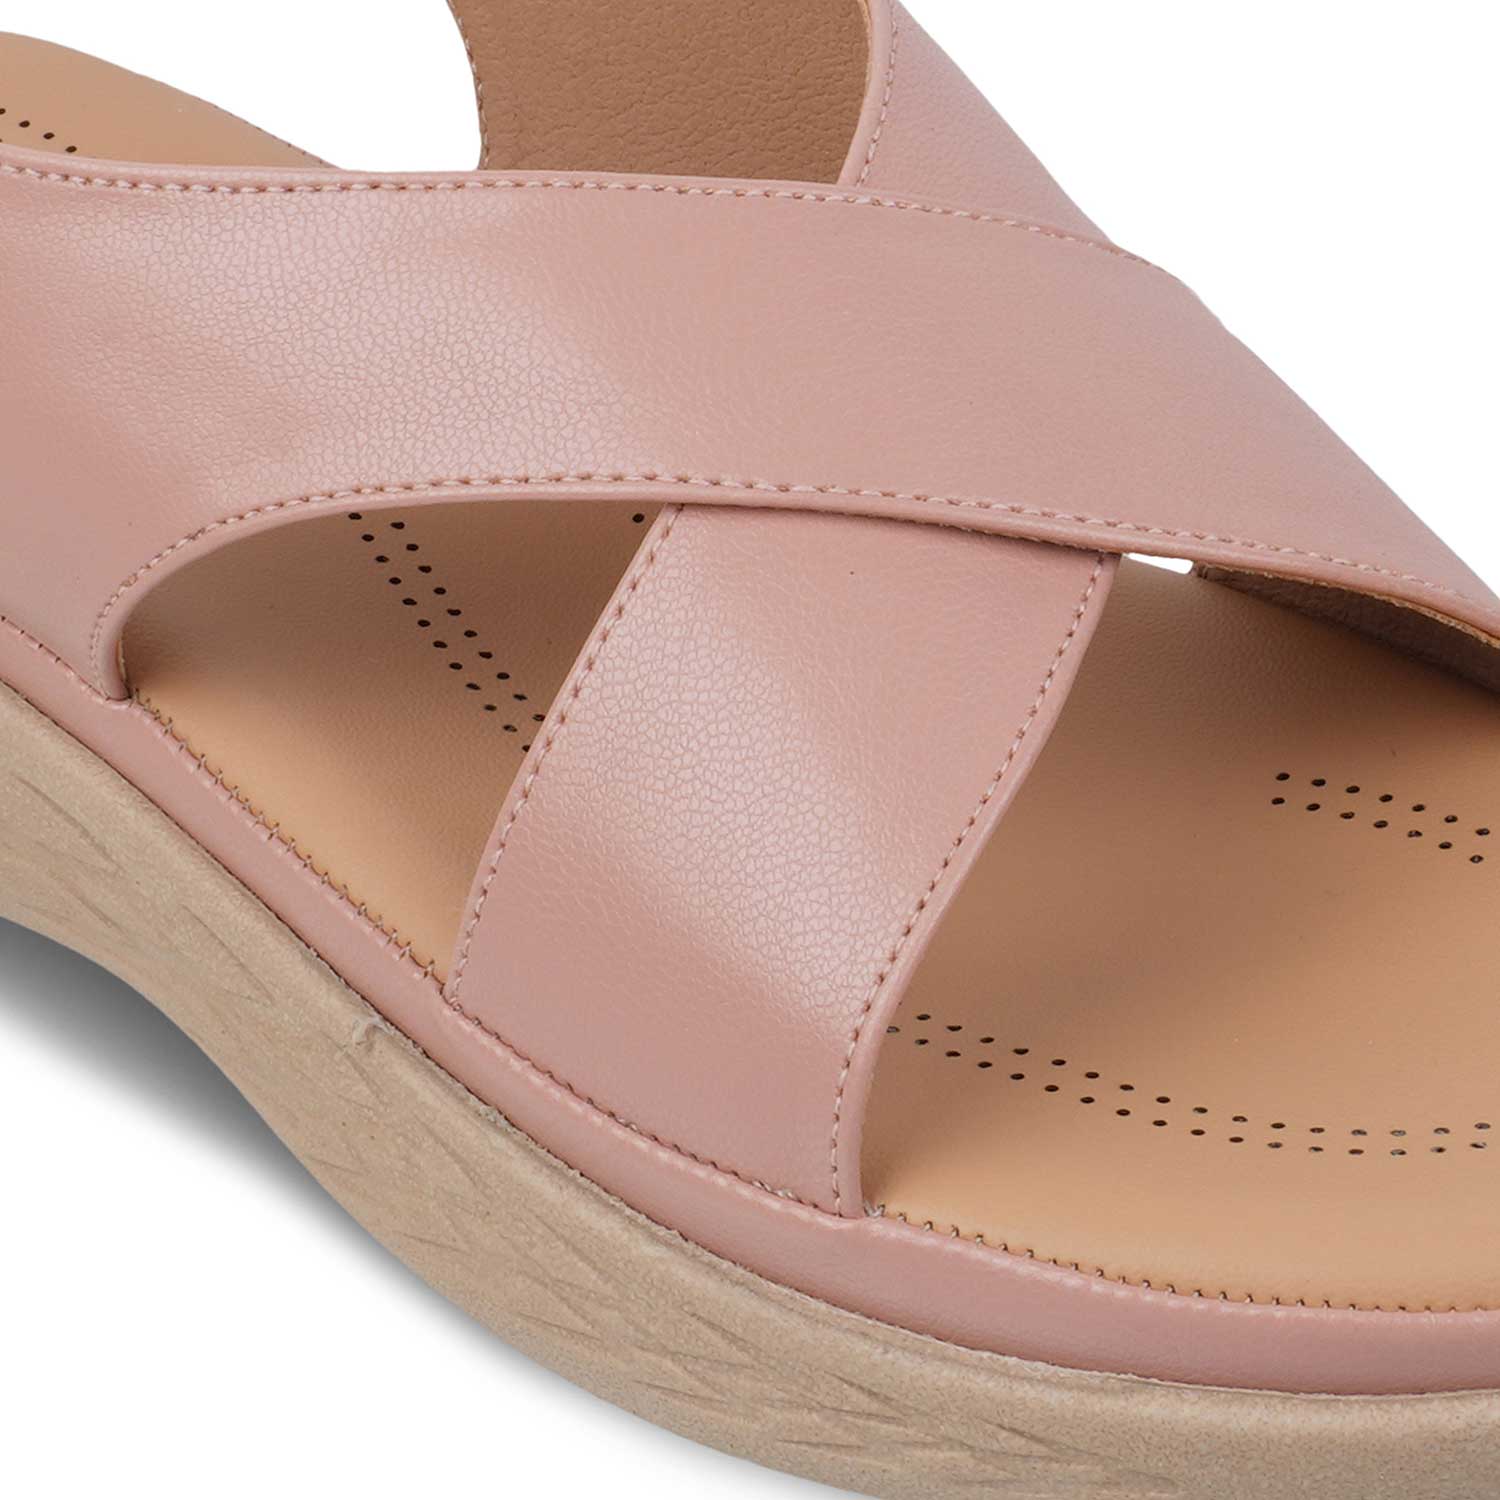 The Havit Pink Women's Casual Wedge Sandals Tresmode - Tresmode